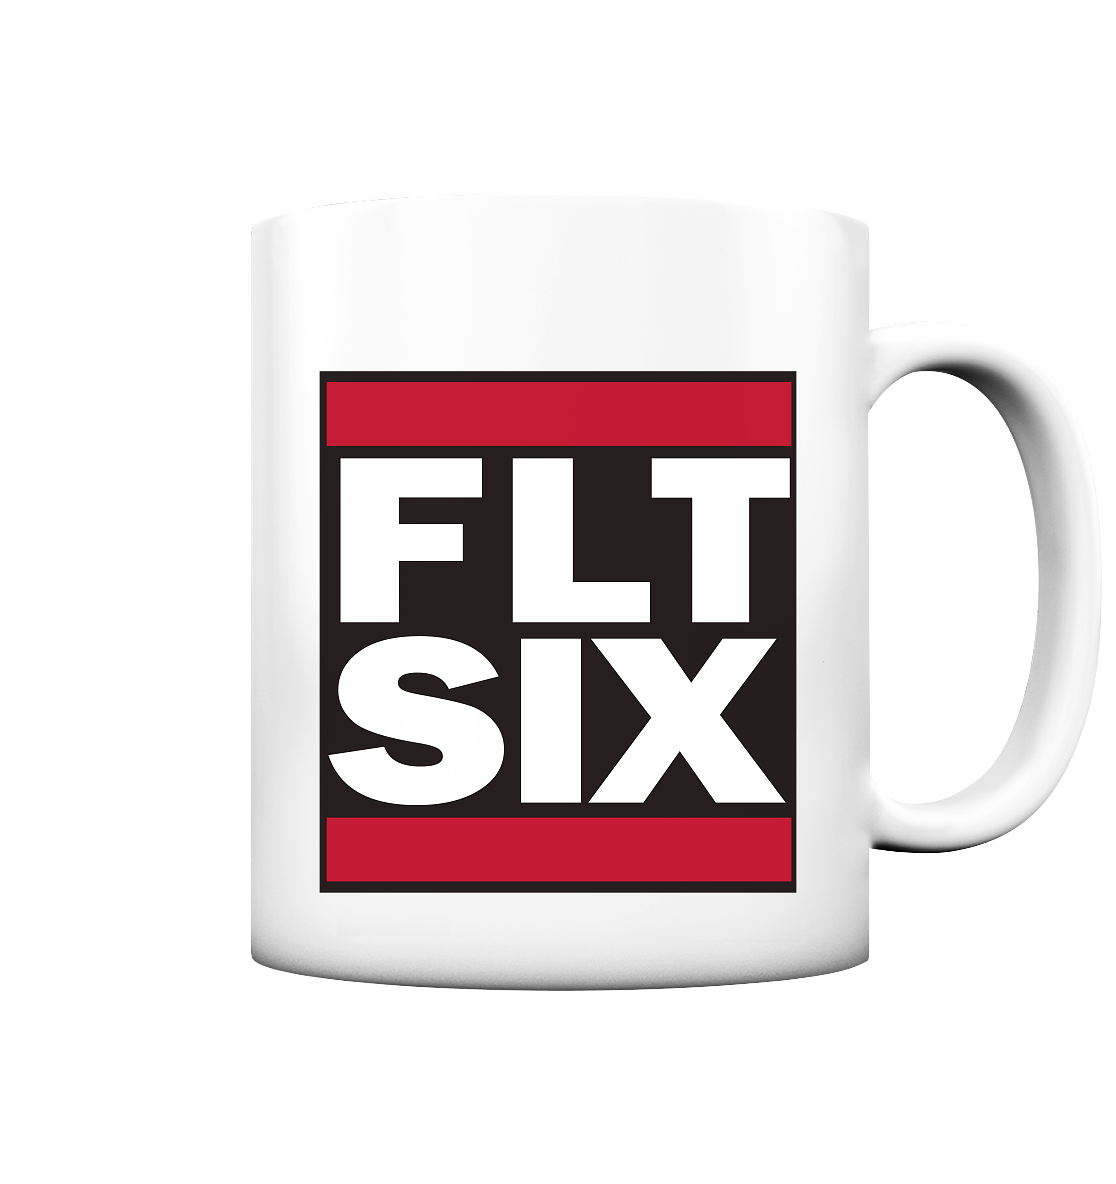 FLT SIX  - Tasse matt